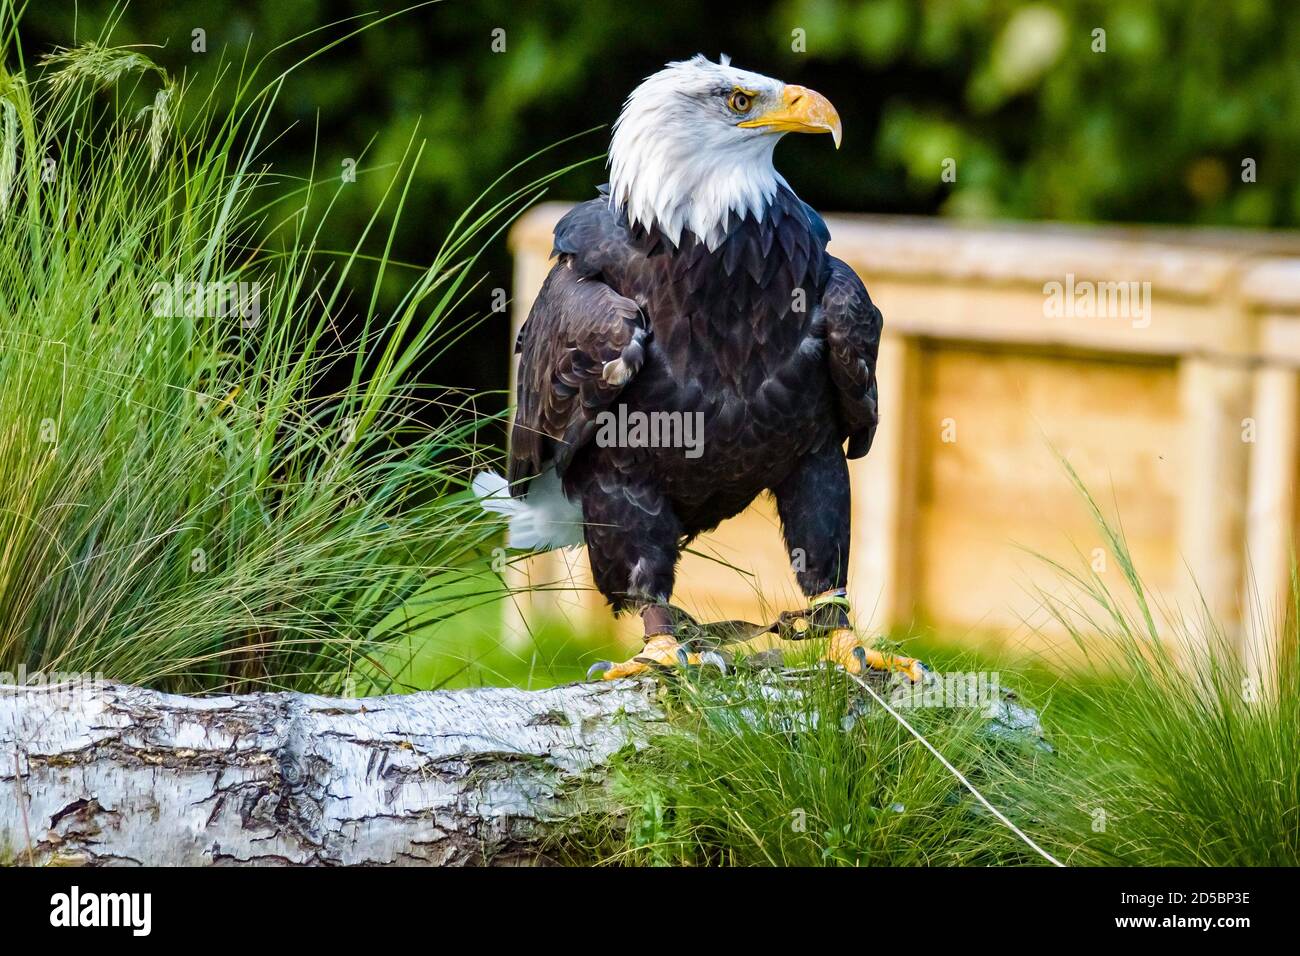 The bald eagle (Haliaeetus leucocephalus) is a bird of prey found in North America. Stock Photo